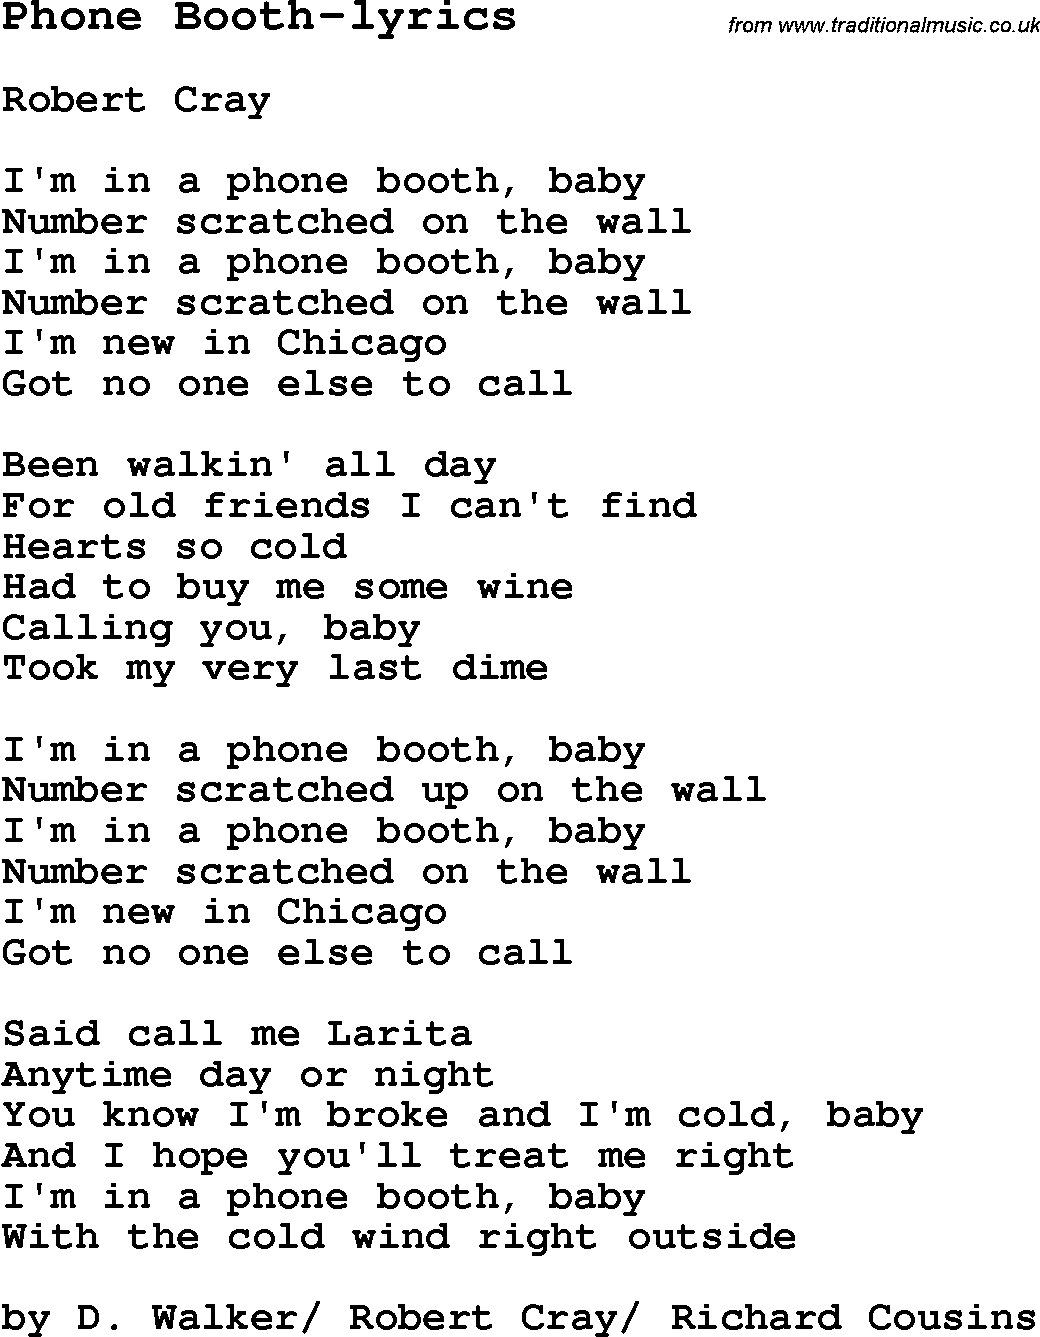 Blues Guitar Song, lyrics, chords, tablature, playing hints for Phone Booth-lyrics